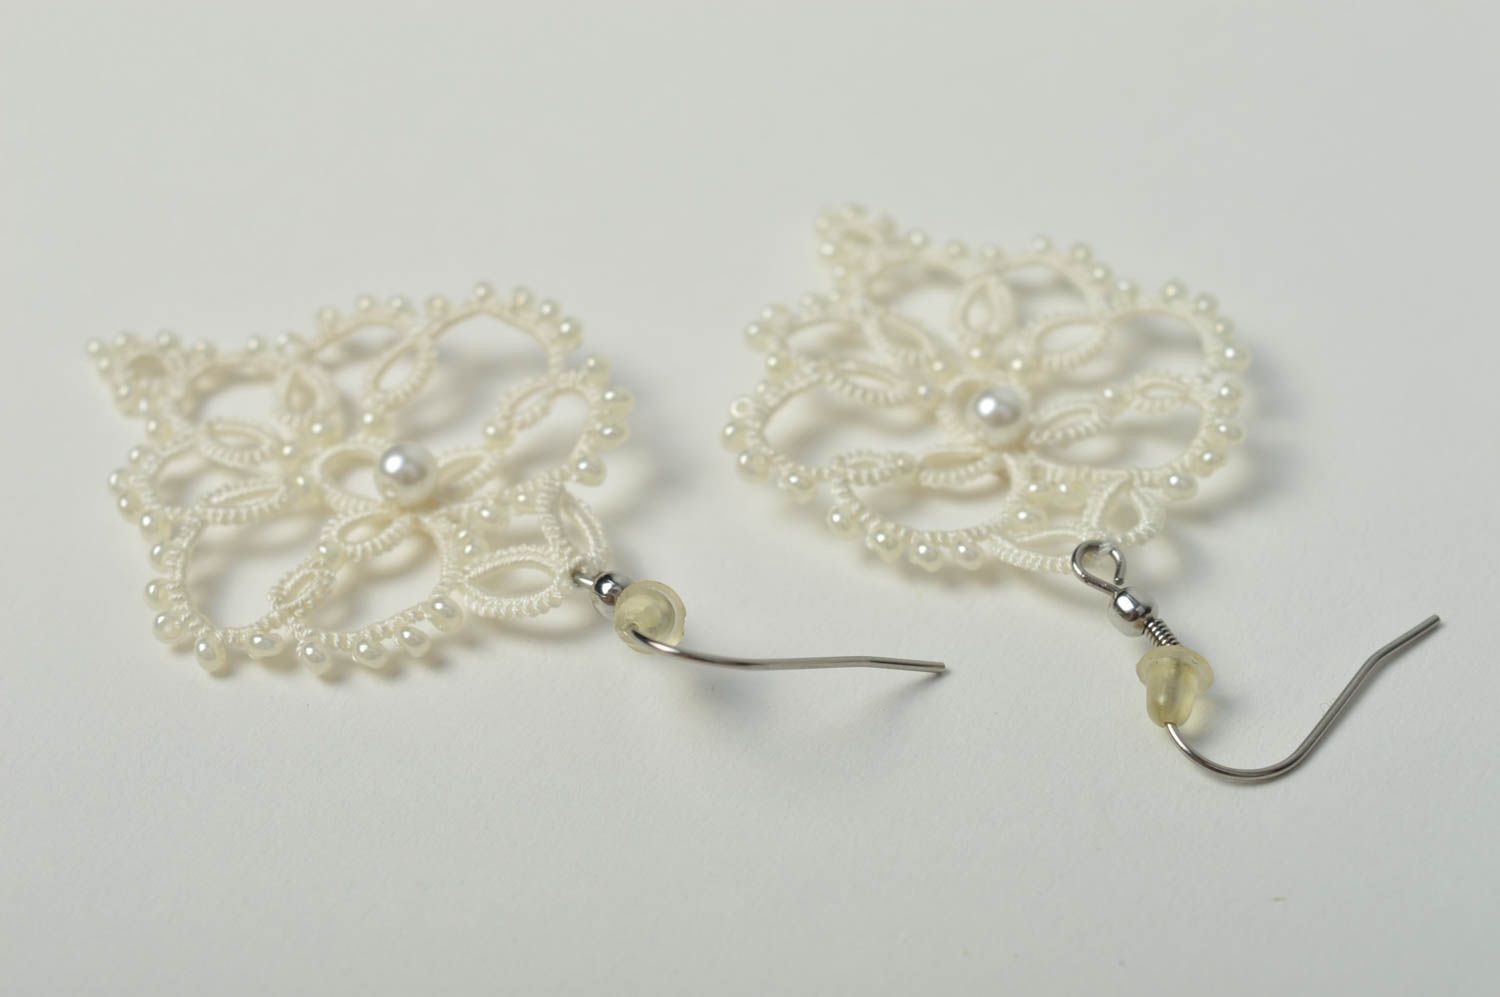 Stylish handmade earrings interesting wedding accessories lovely jewelry photo 4